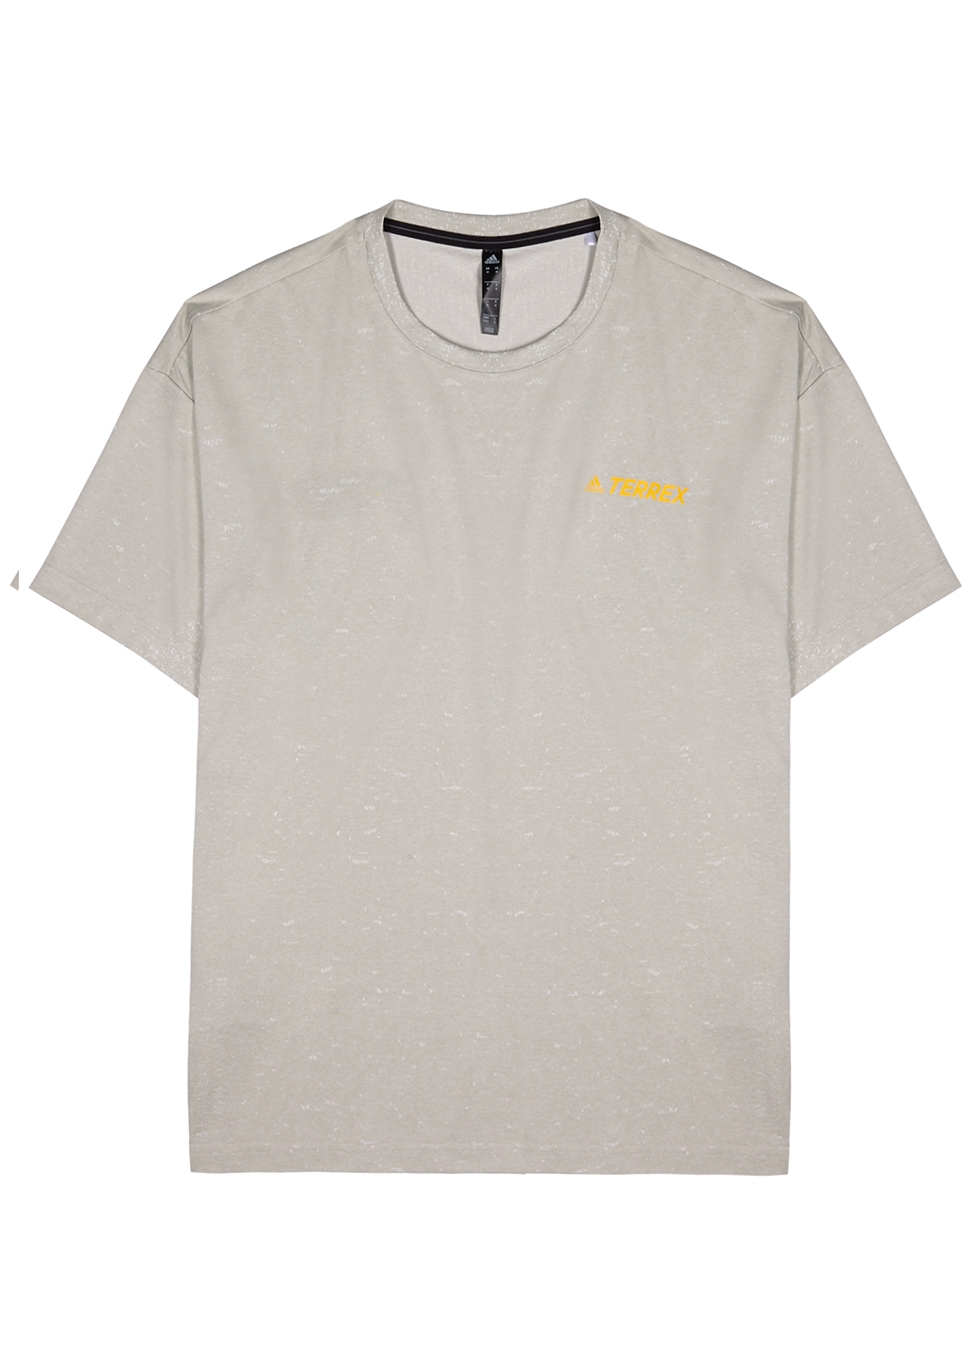 ADIDAS ORIGINALS Terrex Hike grey jersey T-shirt - Harvey Nichols